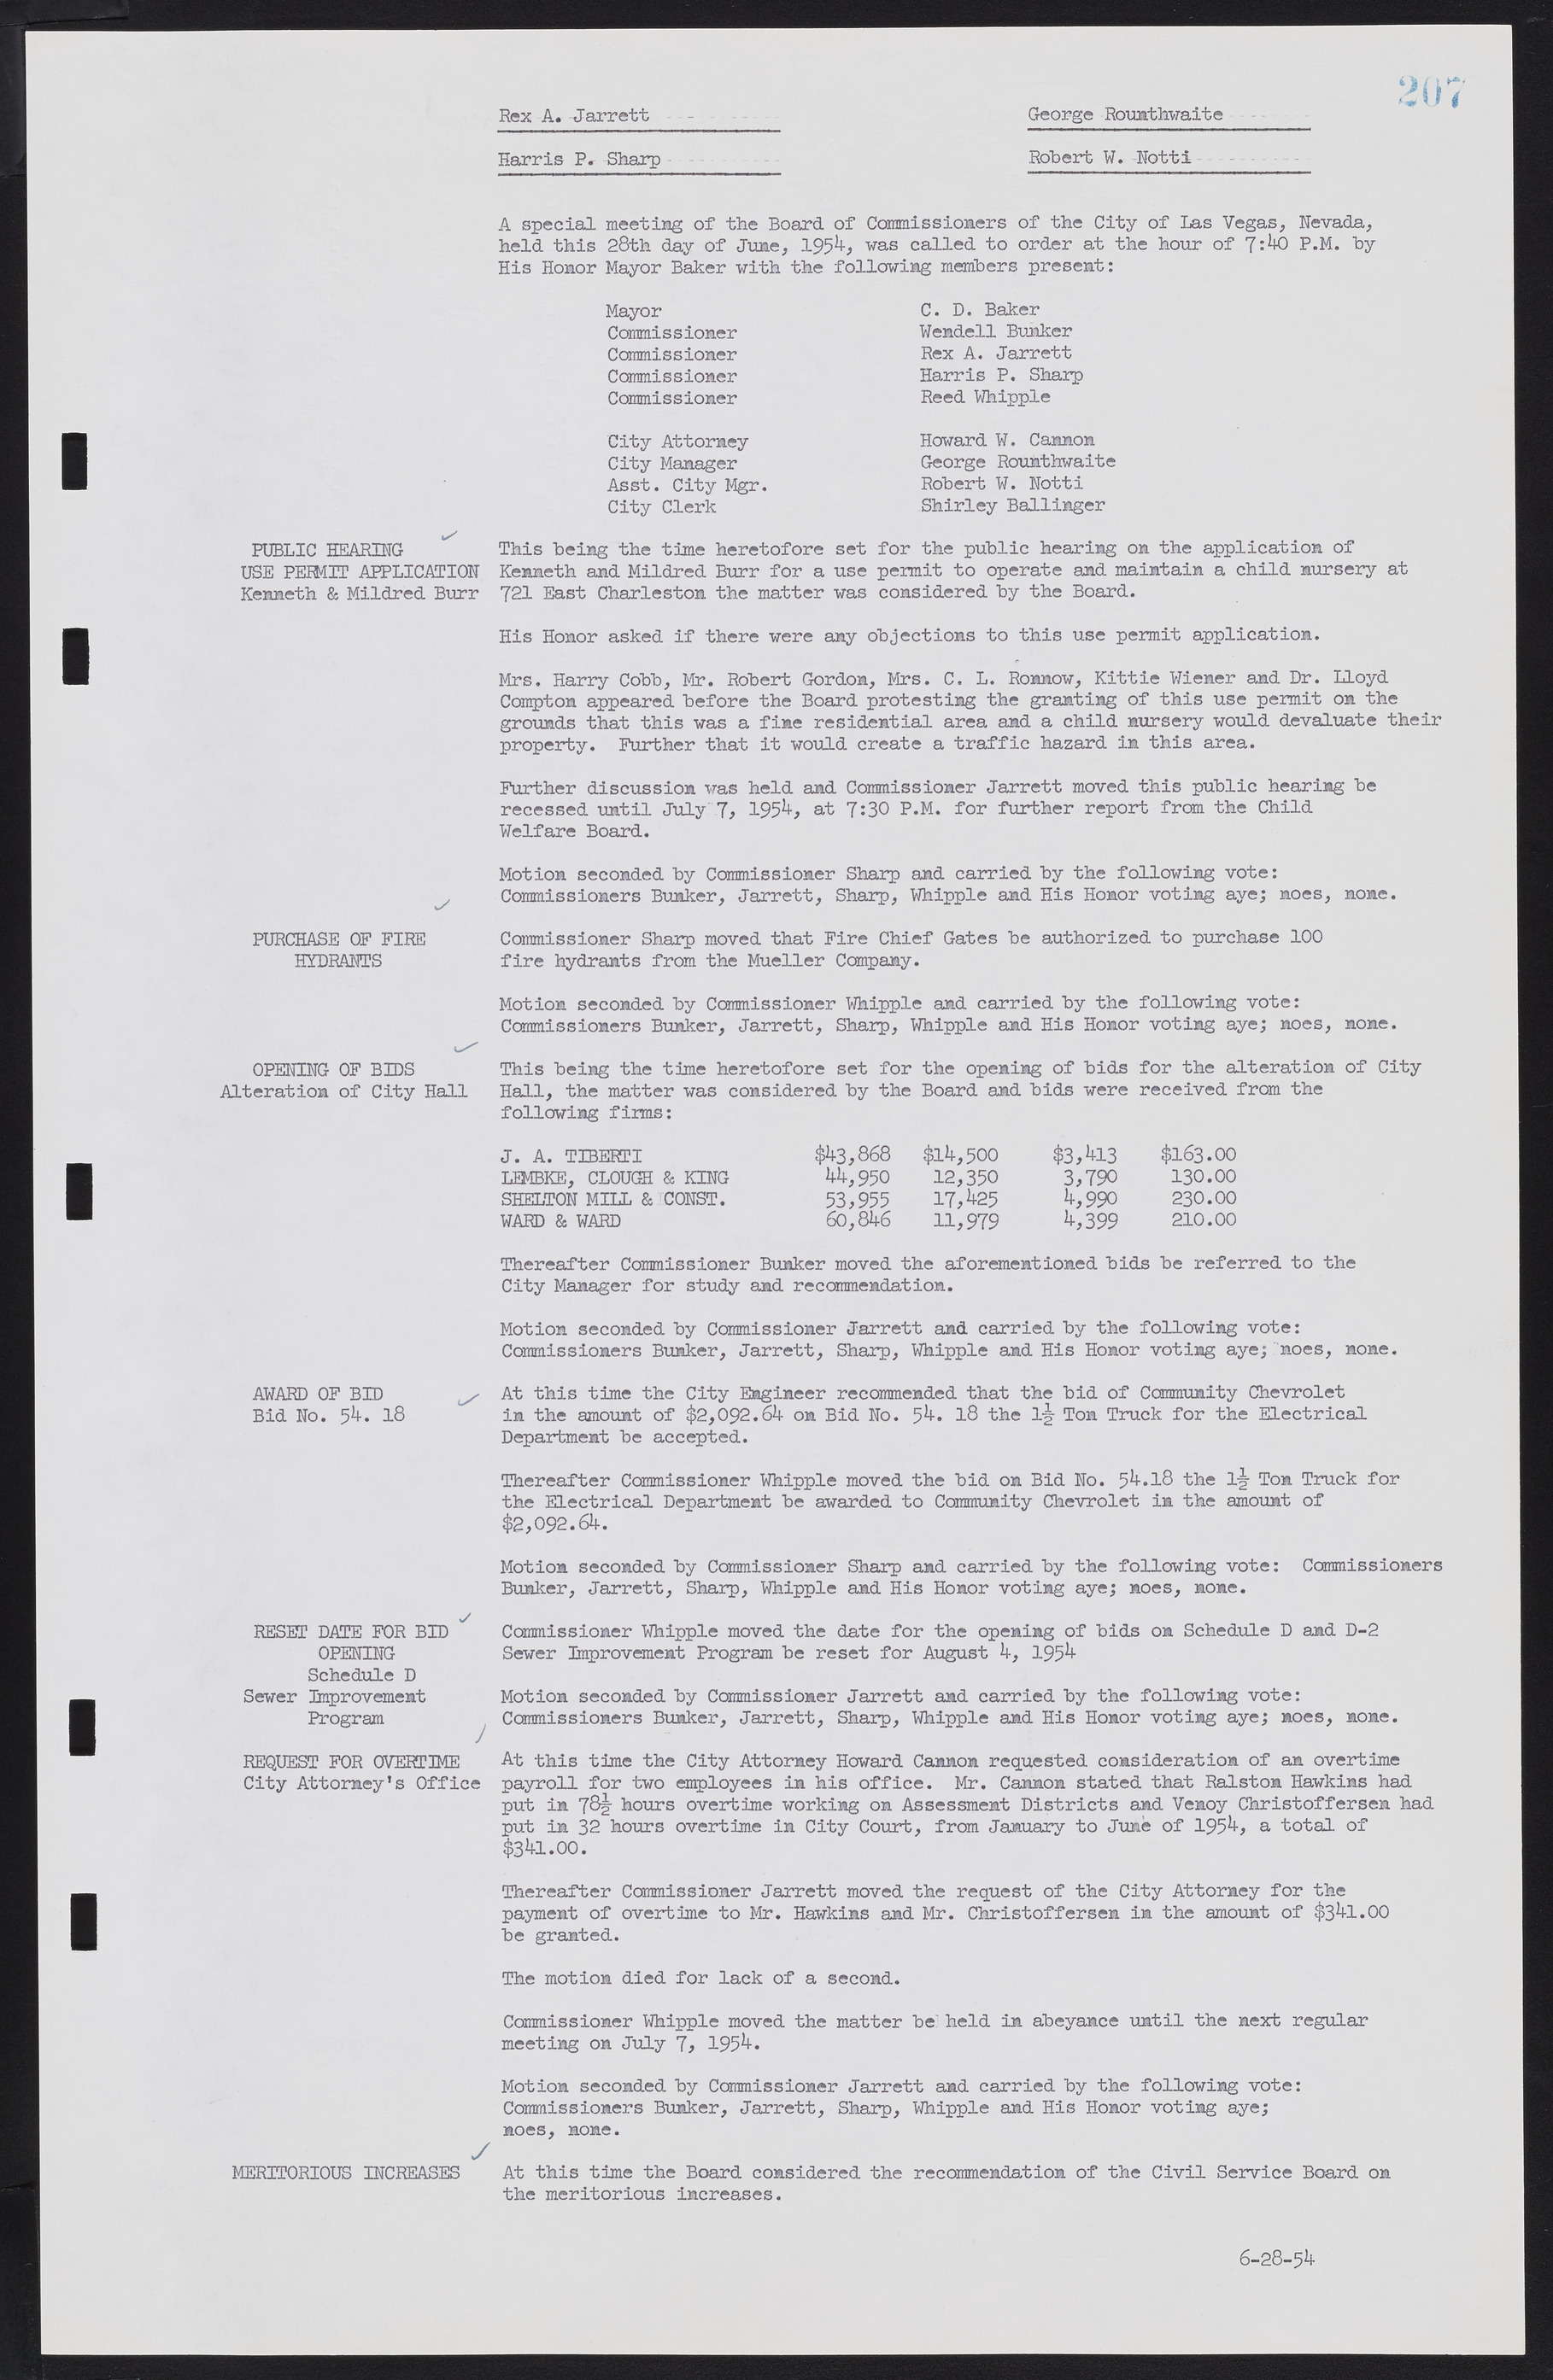 Las Vegas City Commission Minutes, February 17, 1954 to September 21, 1955, lvc000009-213